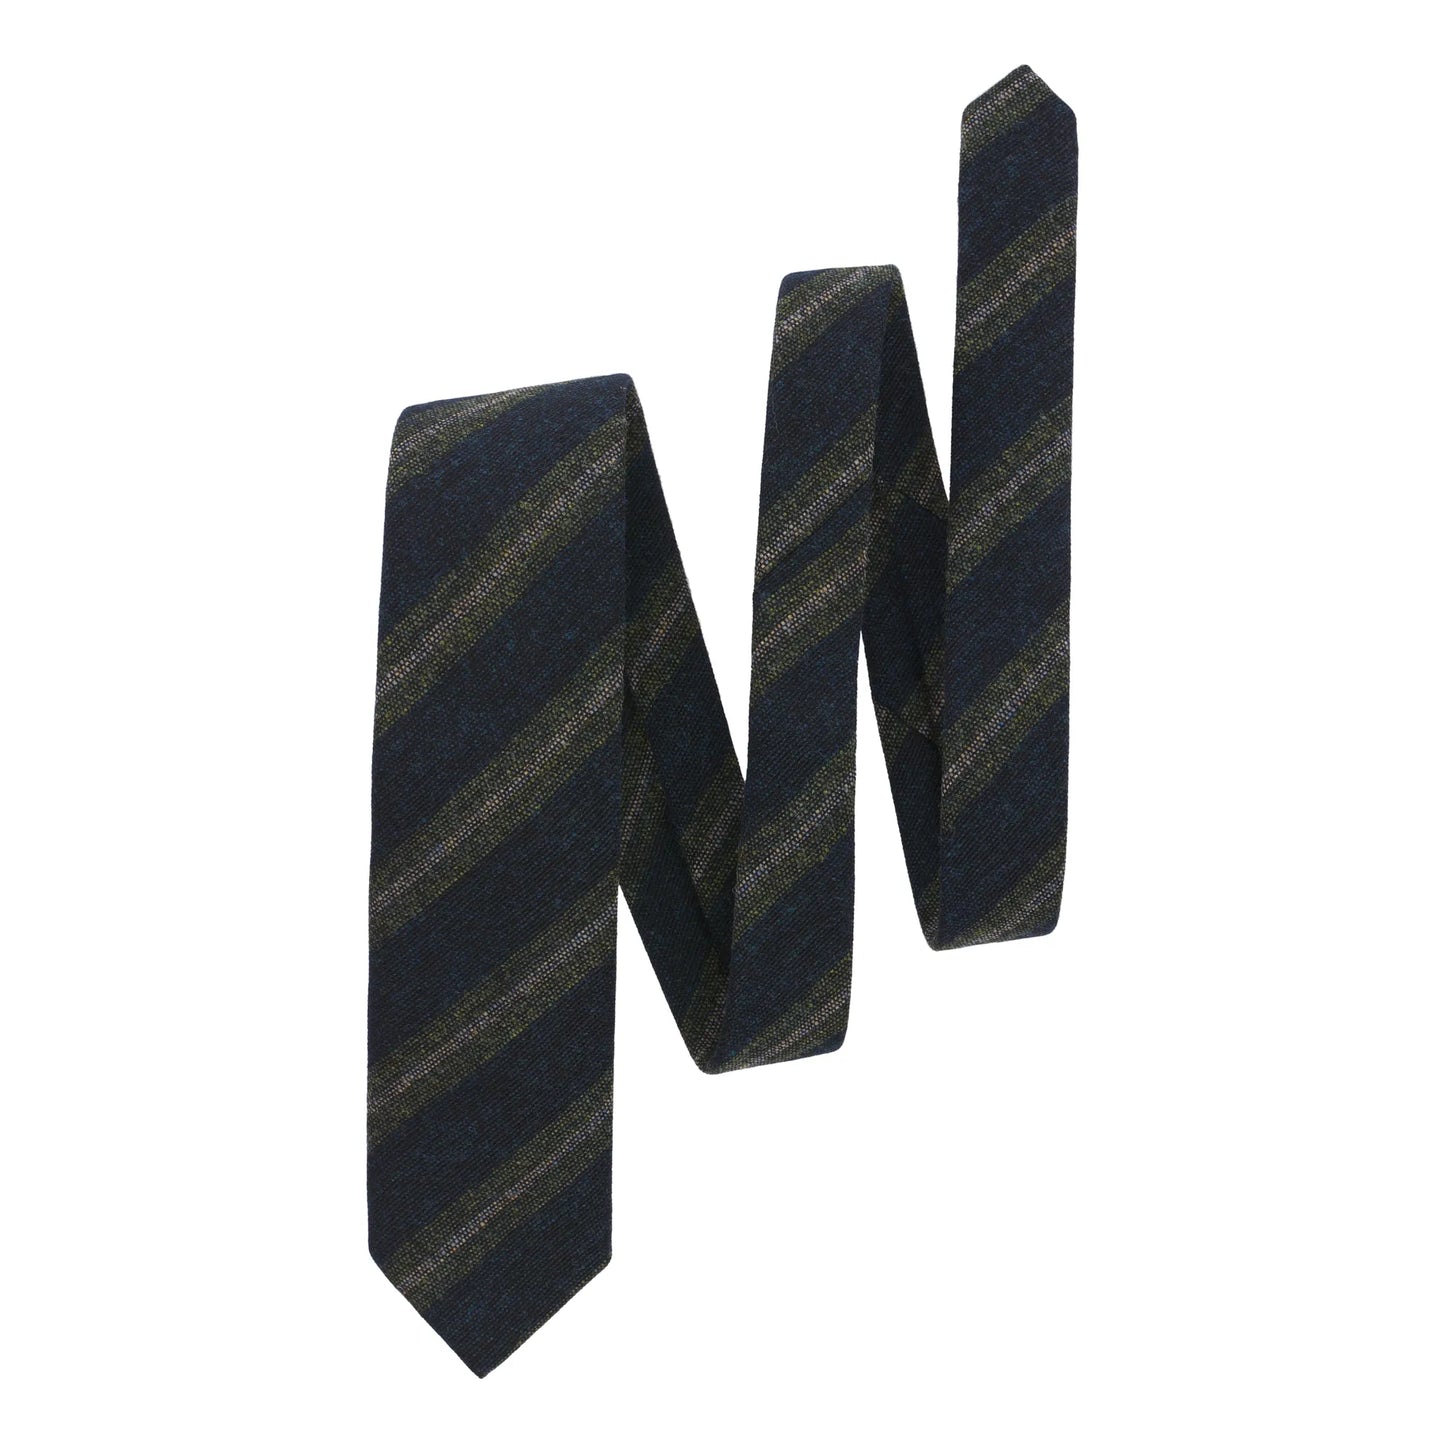 Regimental Woven Wool Tie in Green and Blue